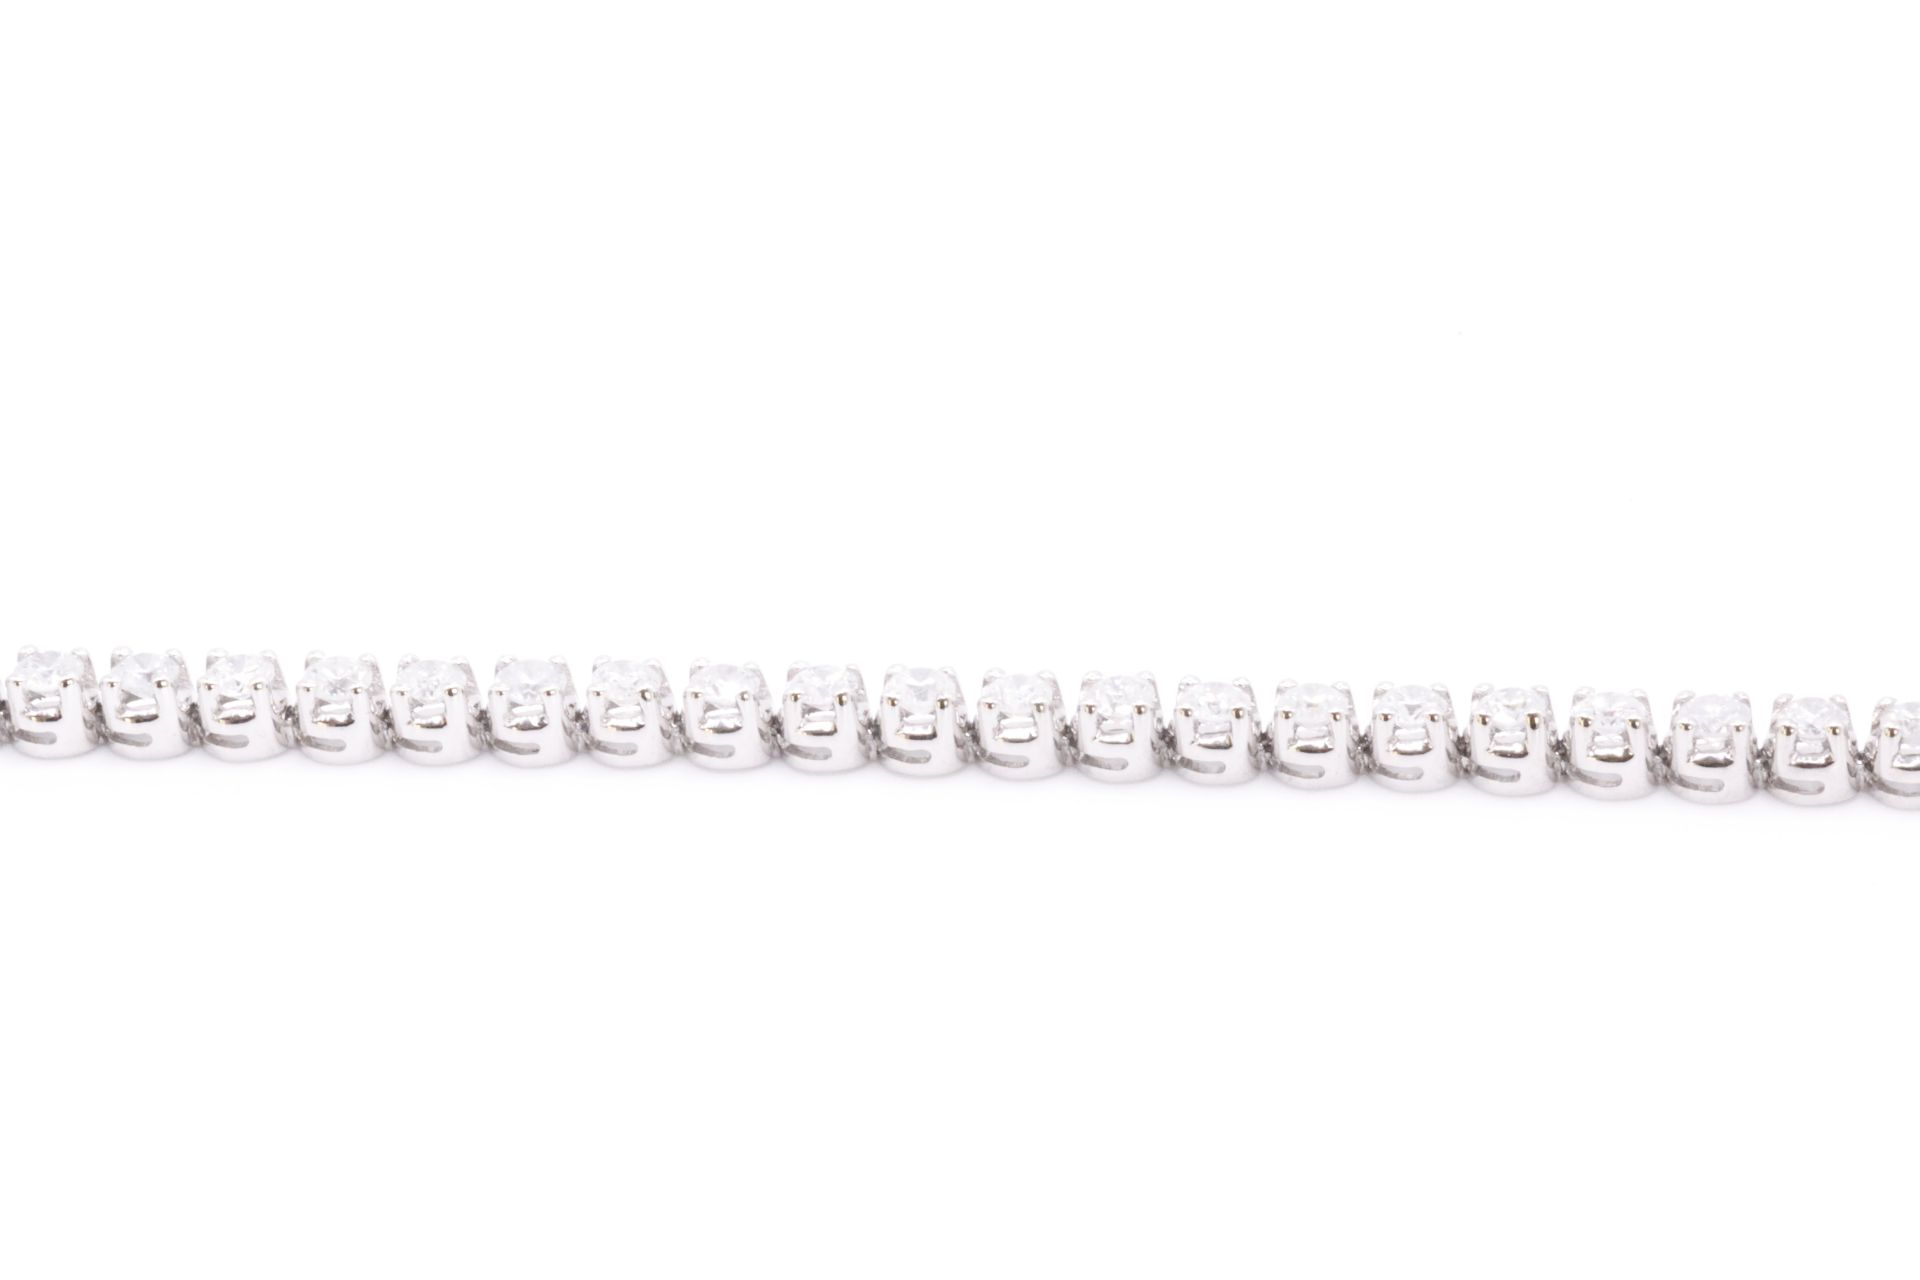 ** ON SALE **7.0 Carat 18ct White Gold Tennis Bracelet set with Round Brilliant Cut Natural Diamonds - Image 17 of 33